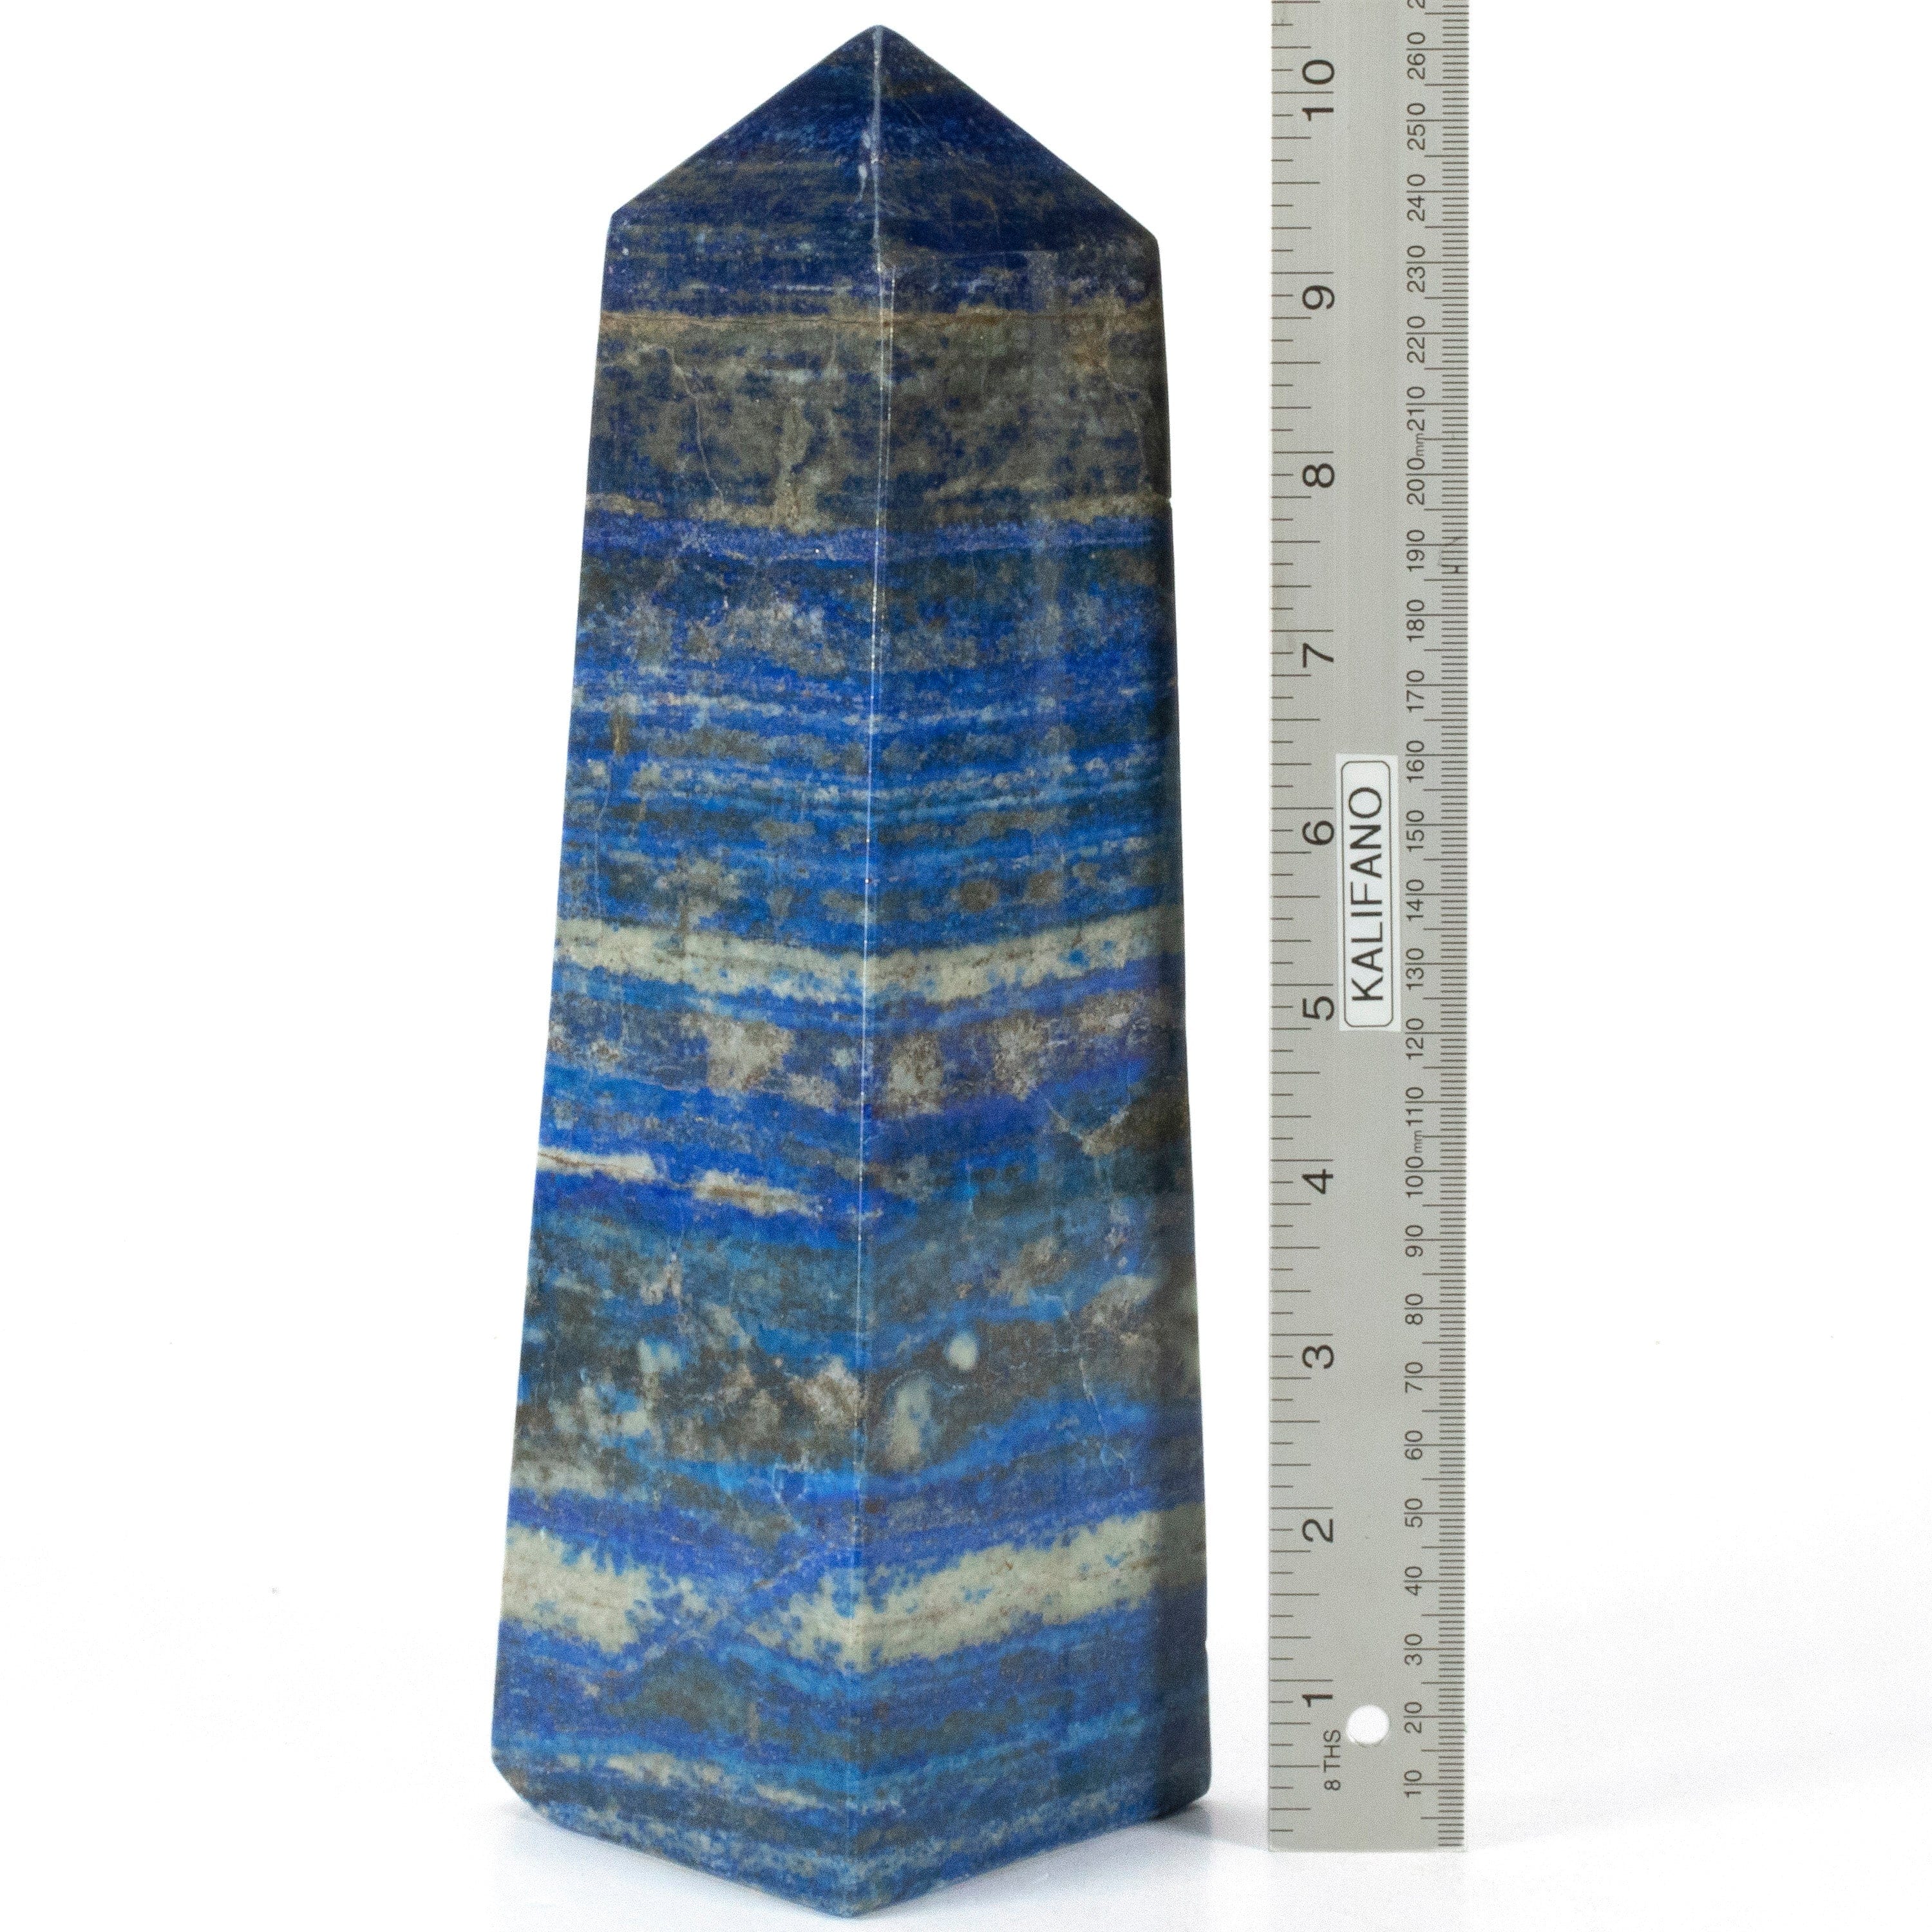 Kalifano Lapis Lapis Lazuli Polished Obelisk from Afghanistan - 11" / 7 lbs LPOB6800.001